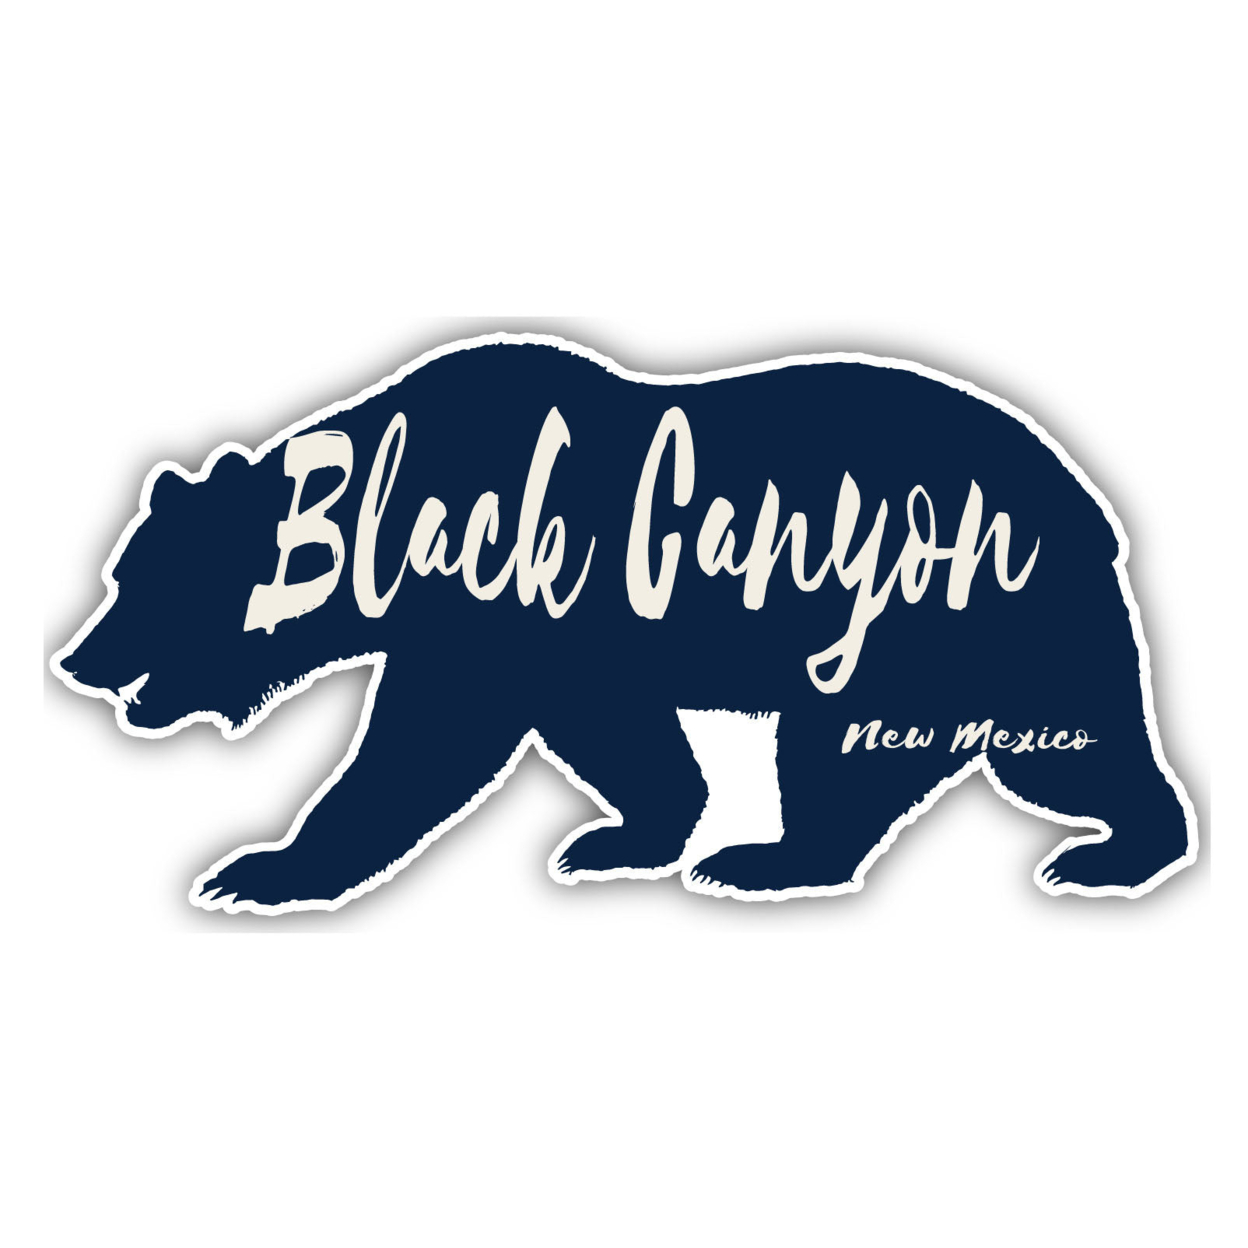 Black Canyon New Mexico Souvenir Decorative Stickers (Choose Theme And Size) - Single Unit, 10-Inch, Bear